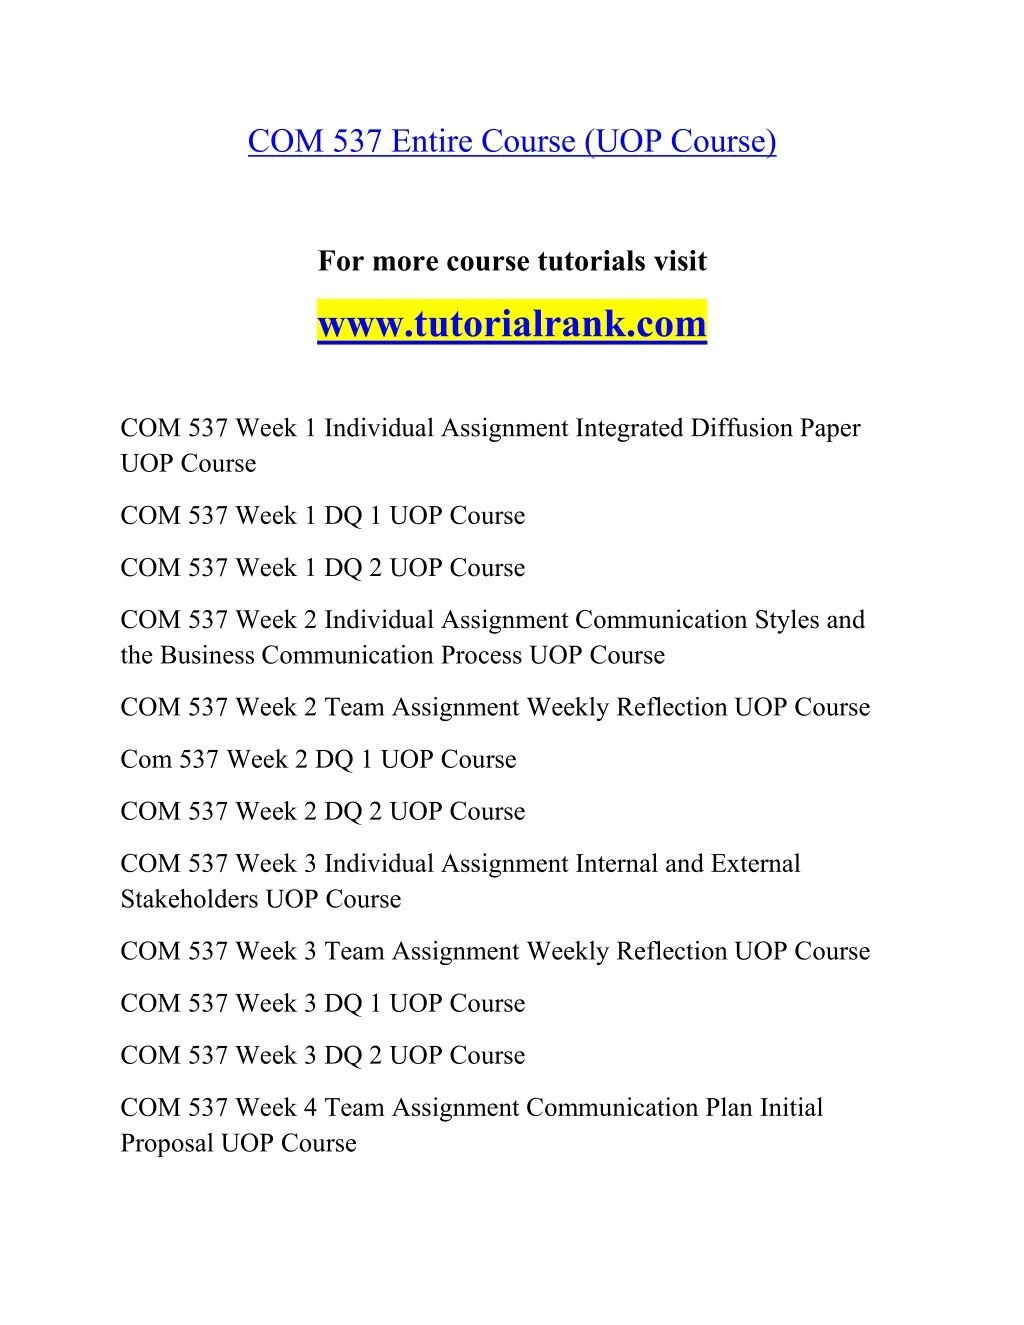 com 537 entire course uop course